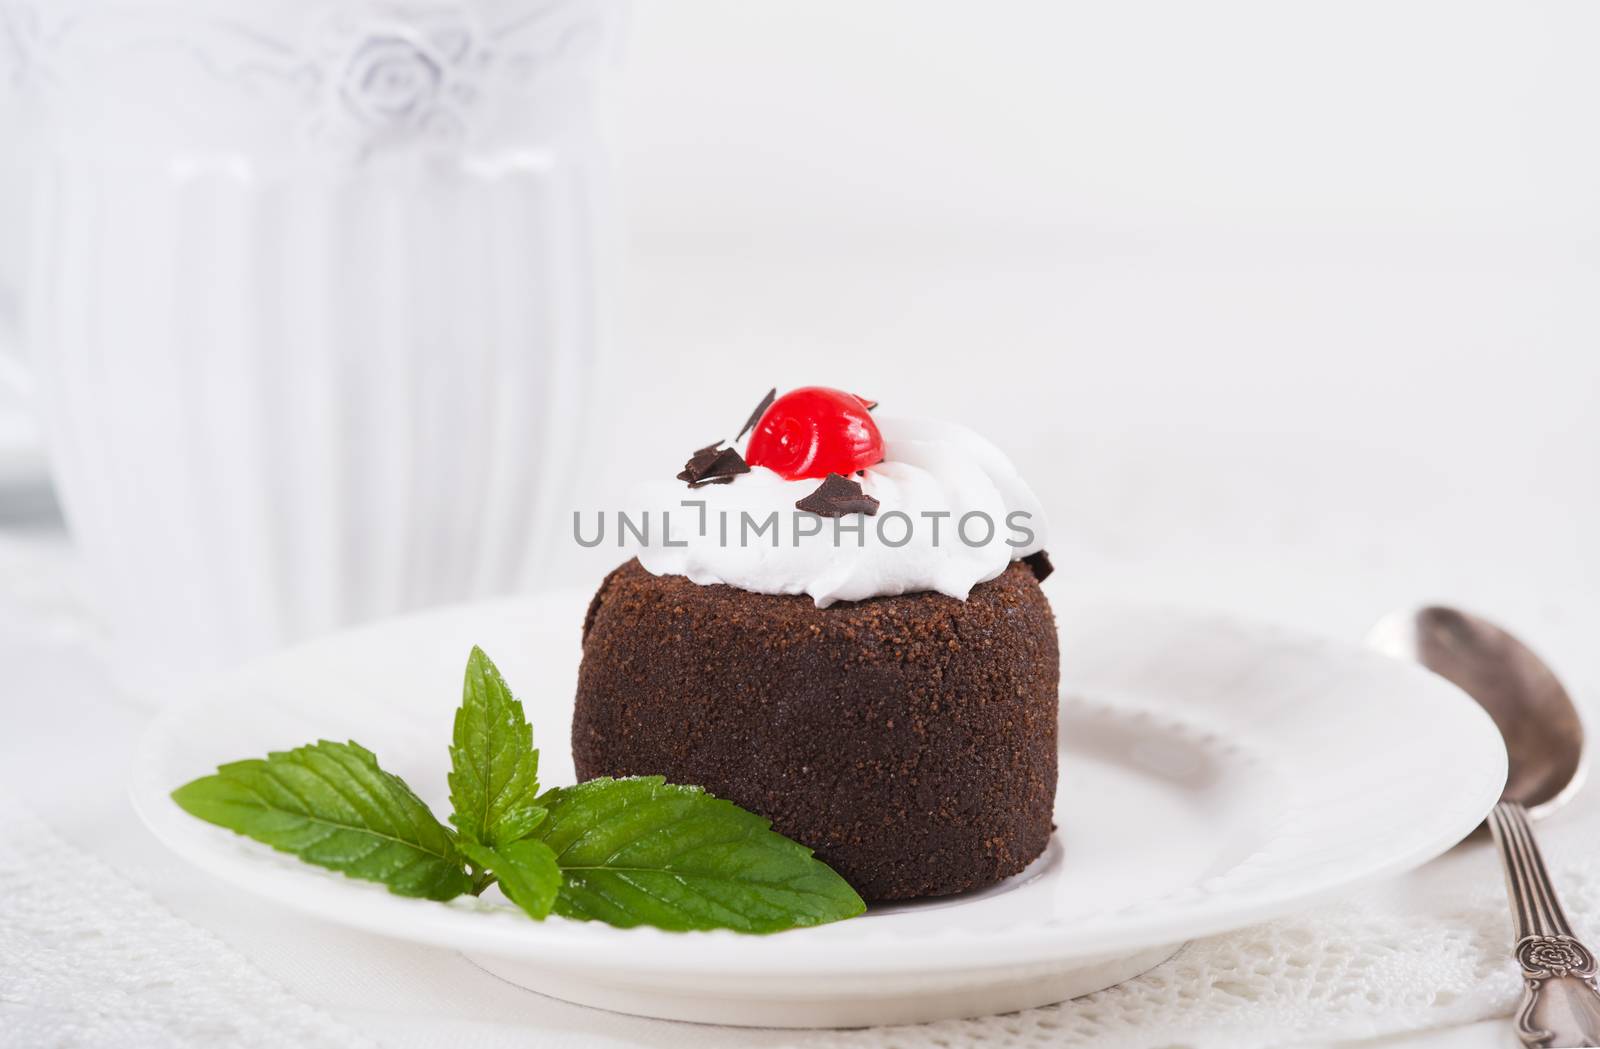 Chocolate sweet cake "Potato" , selective focus by kzen